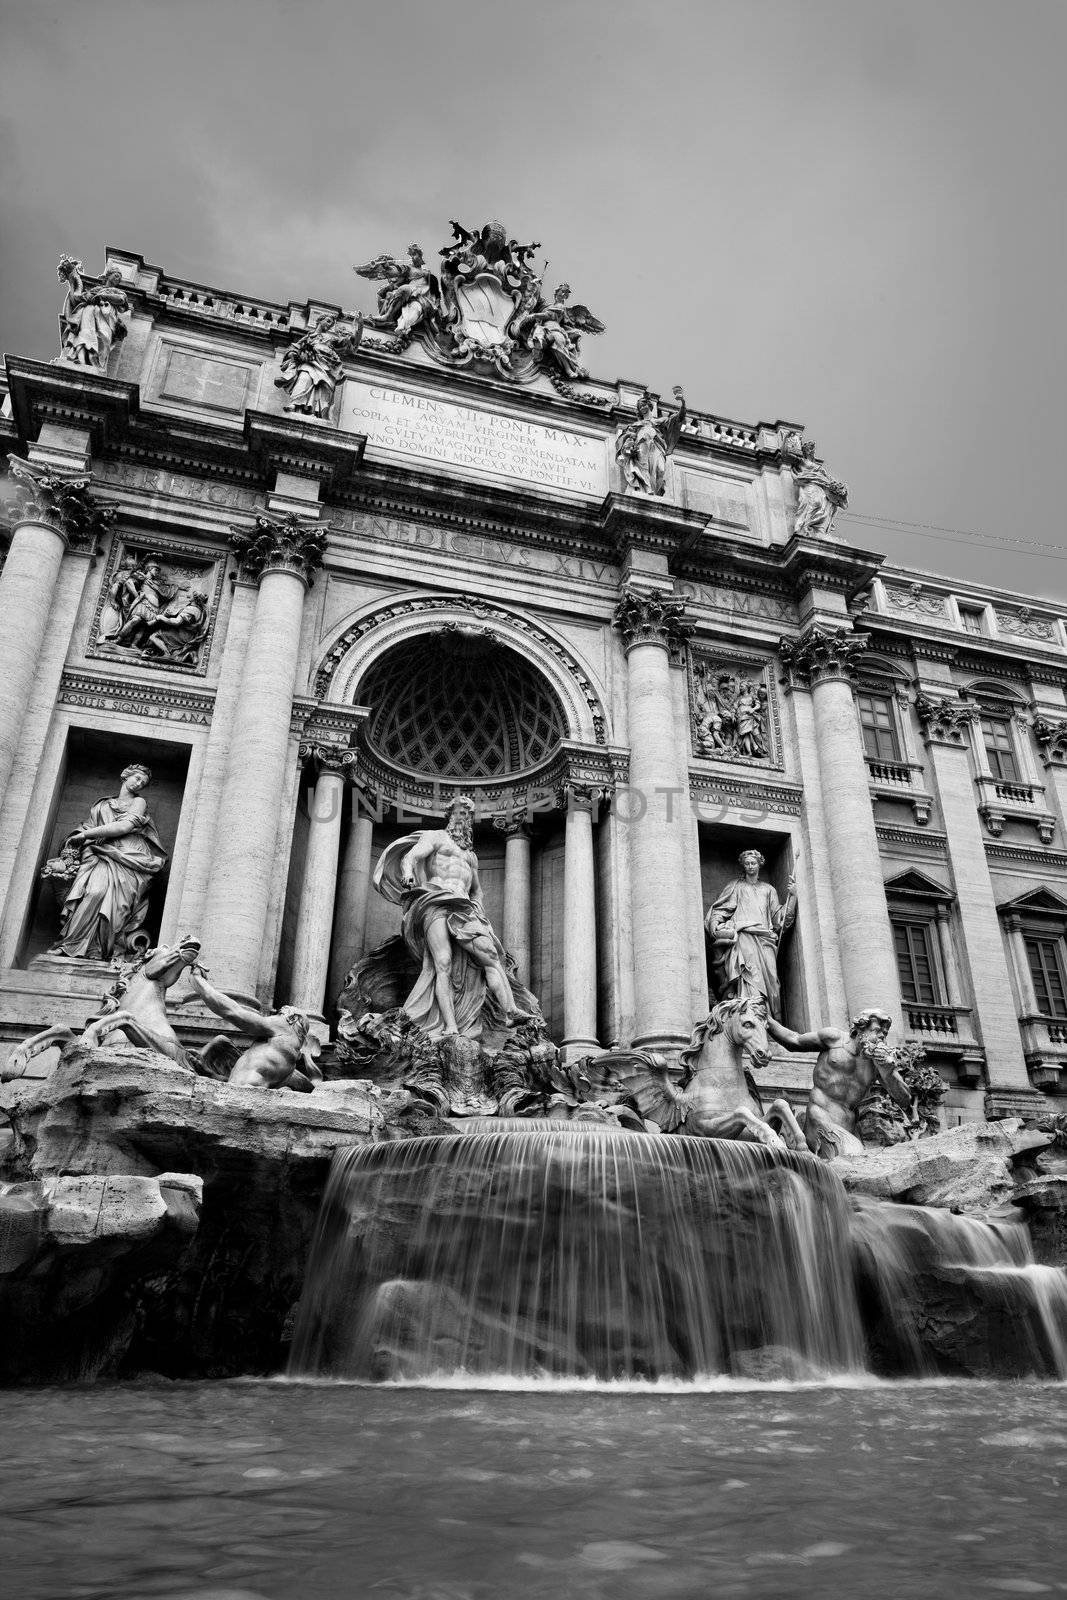 Fontana di Trevi - the famous Trevi fountain in Rome, Italy by viktor_cap